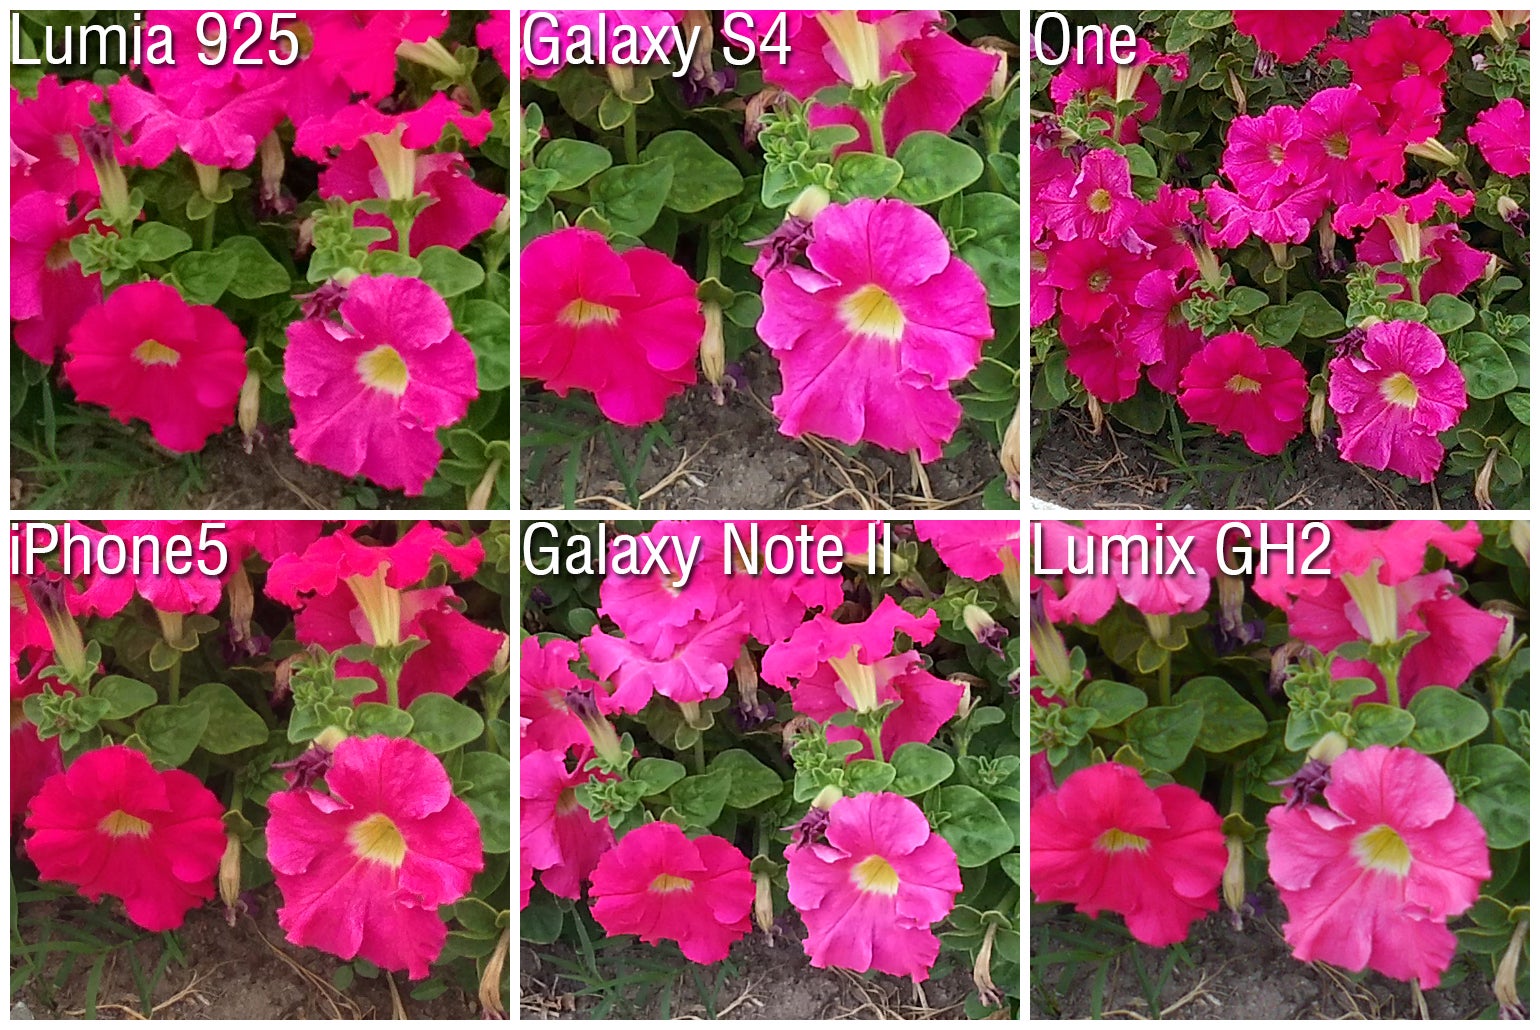 100% crop - Camera comparison: Nokia Lumia 925 vs Samsung Galaxy S4, HTC One, iPhone 5, Samsung Galaxy Note II